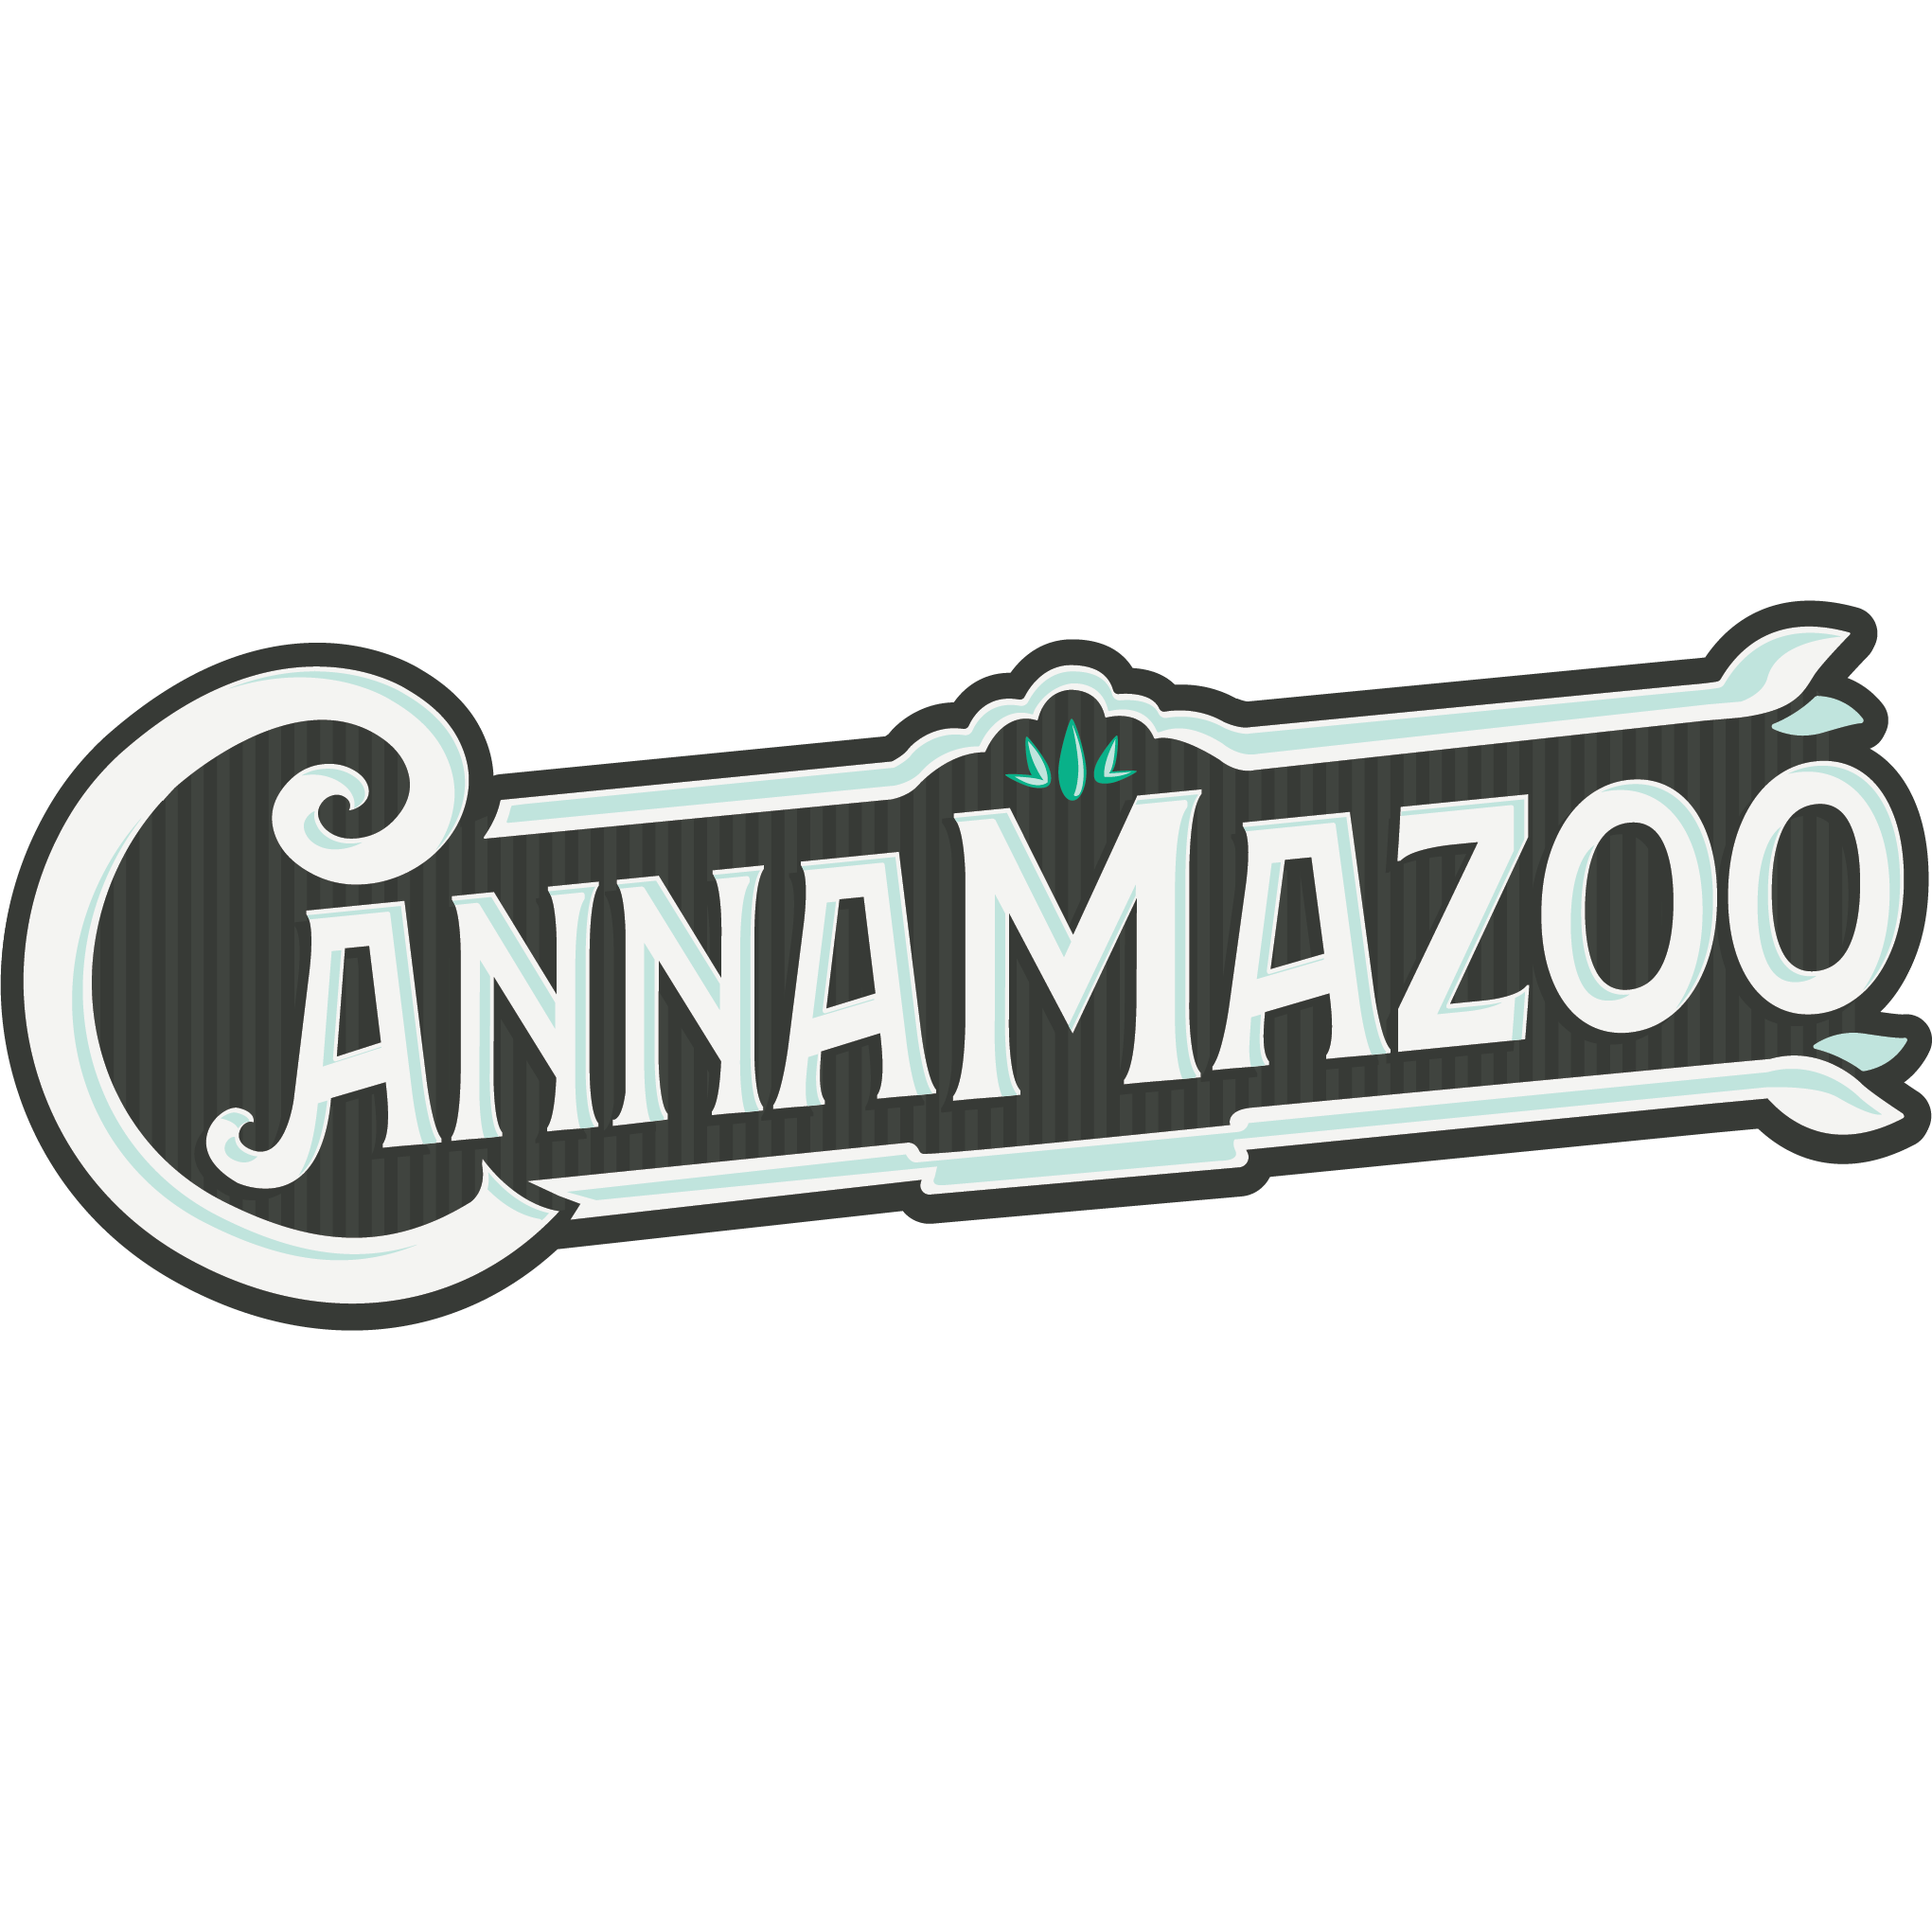 Cannamazoo